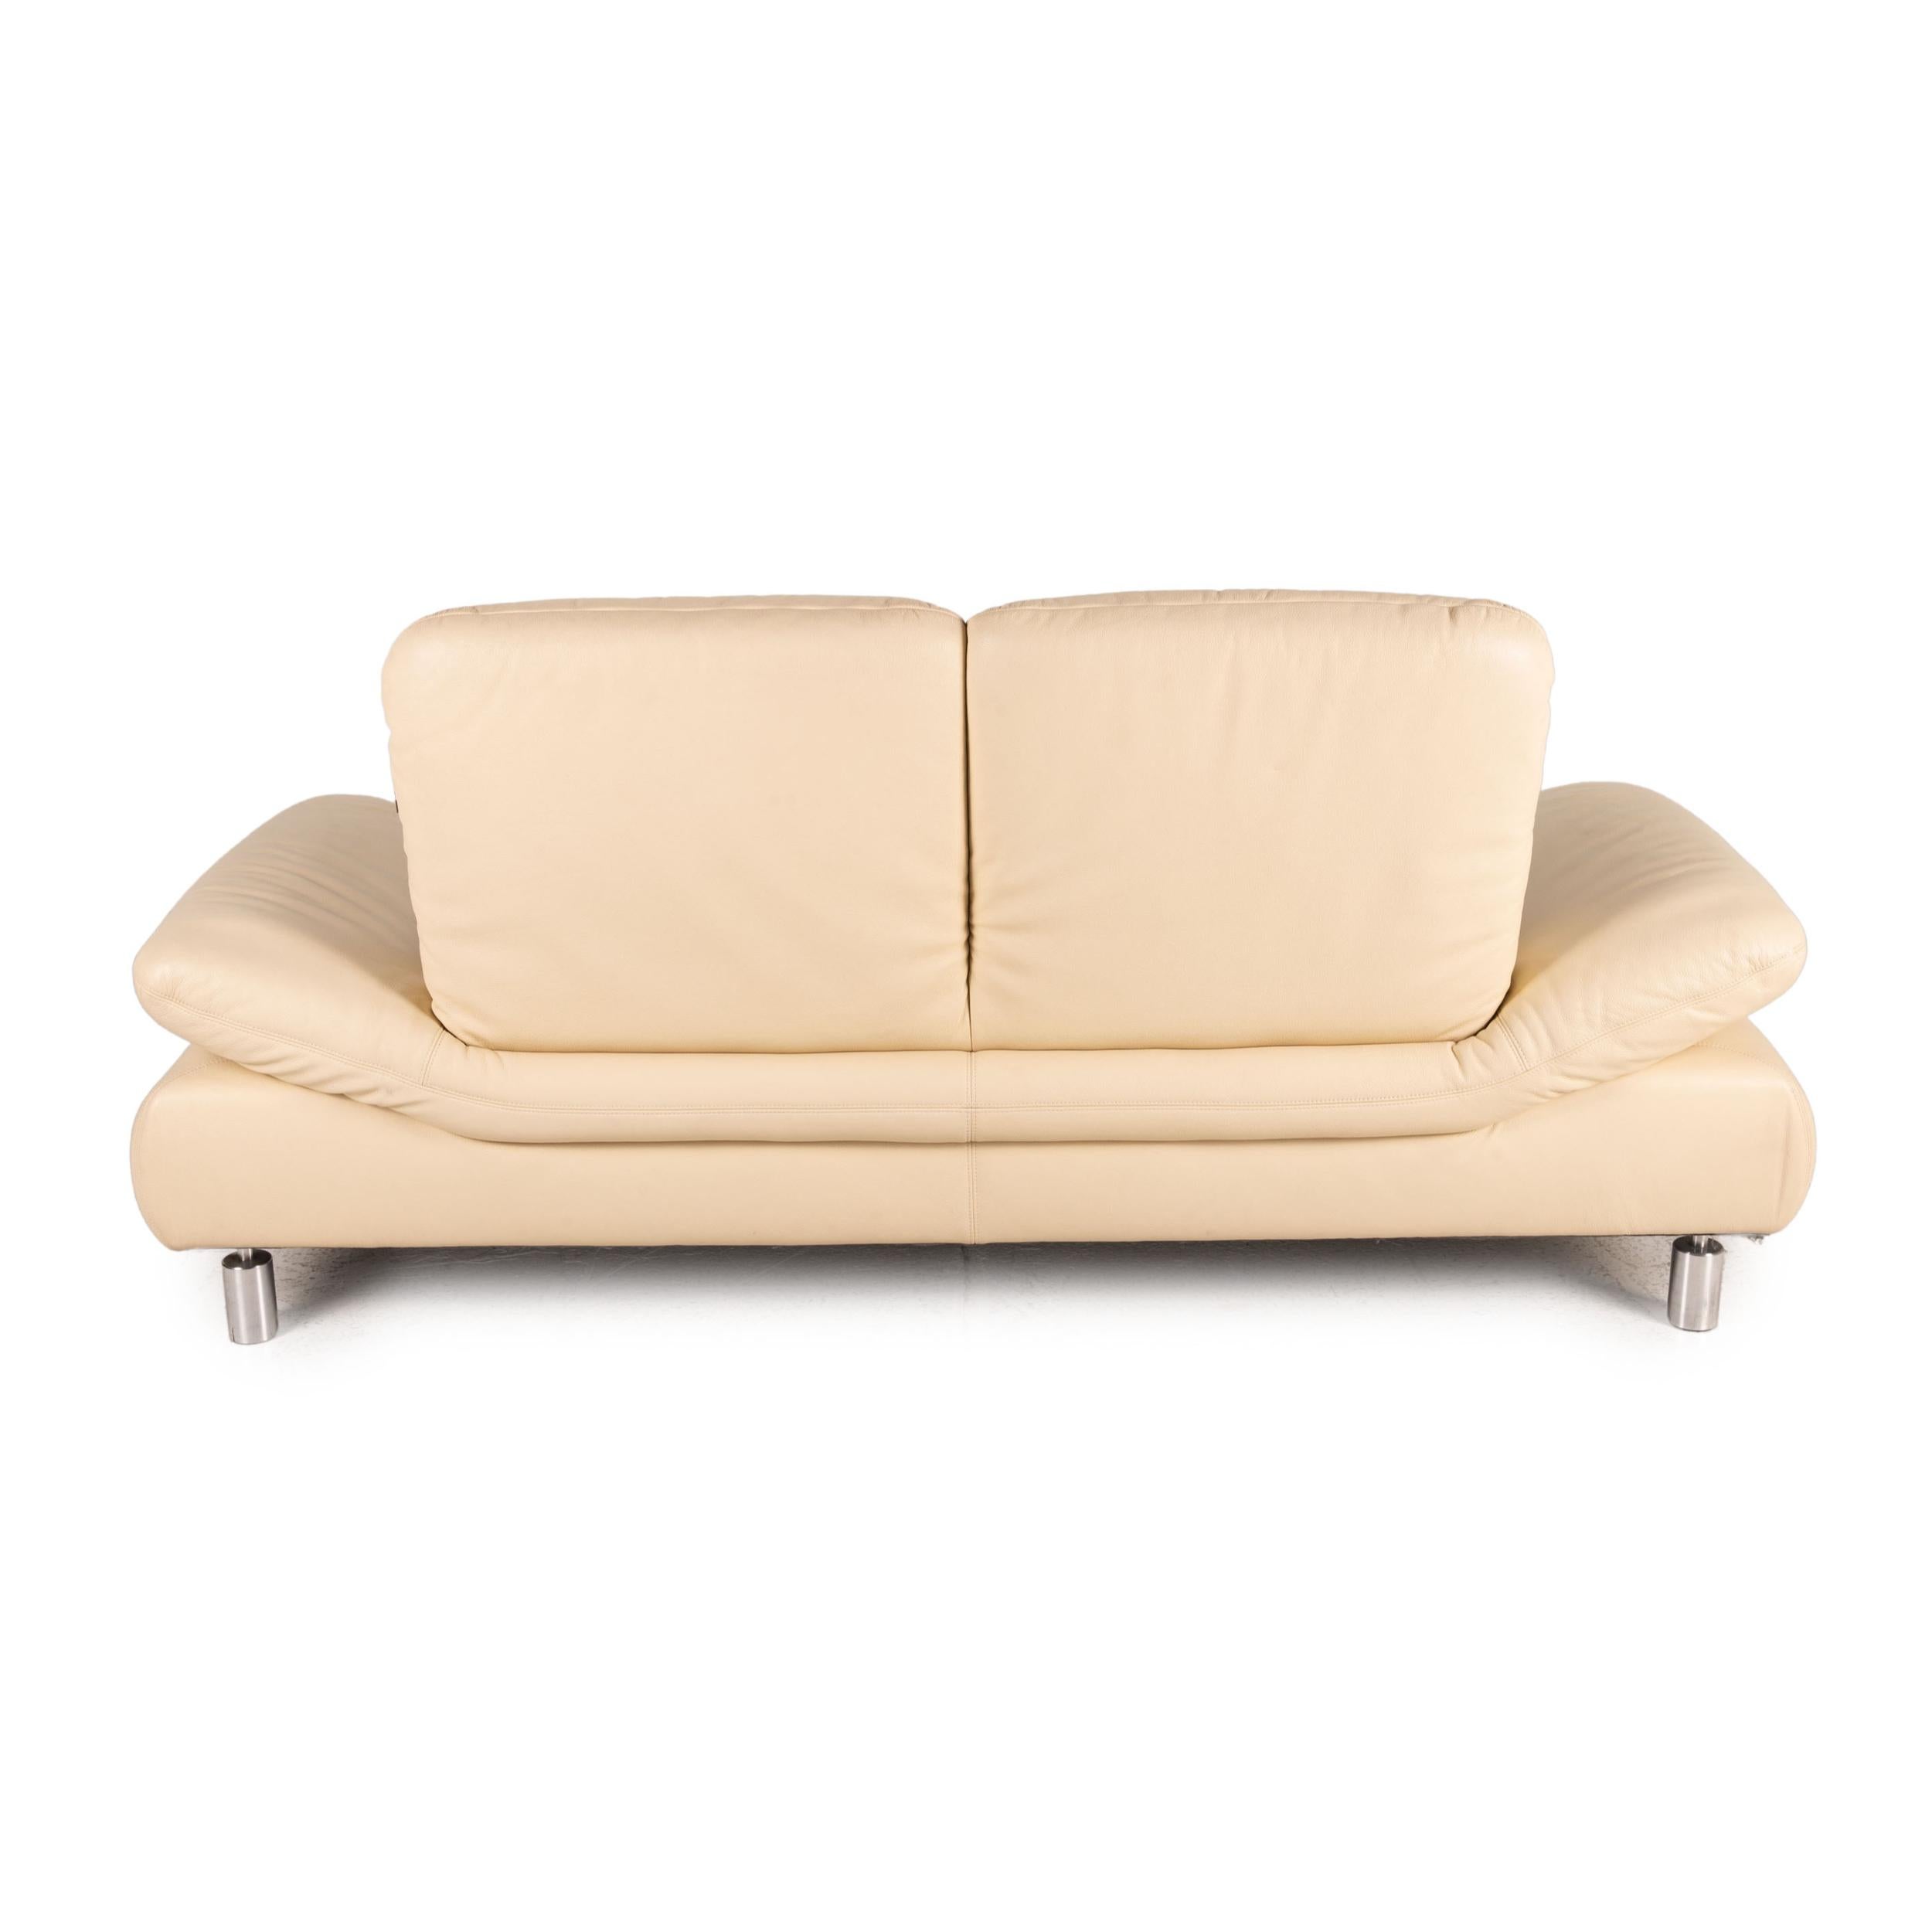 Koinor Rivoli leather sofa set cream 1x two-seater 1x stool function For Sale 8